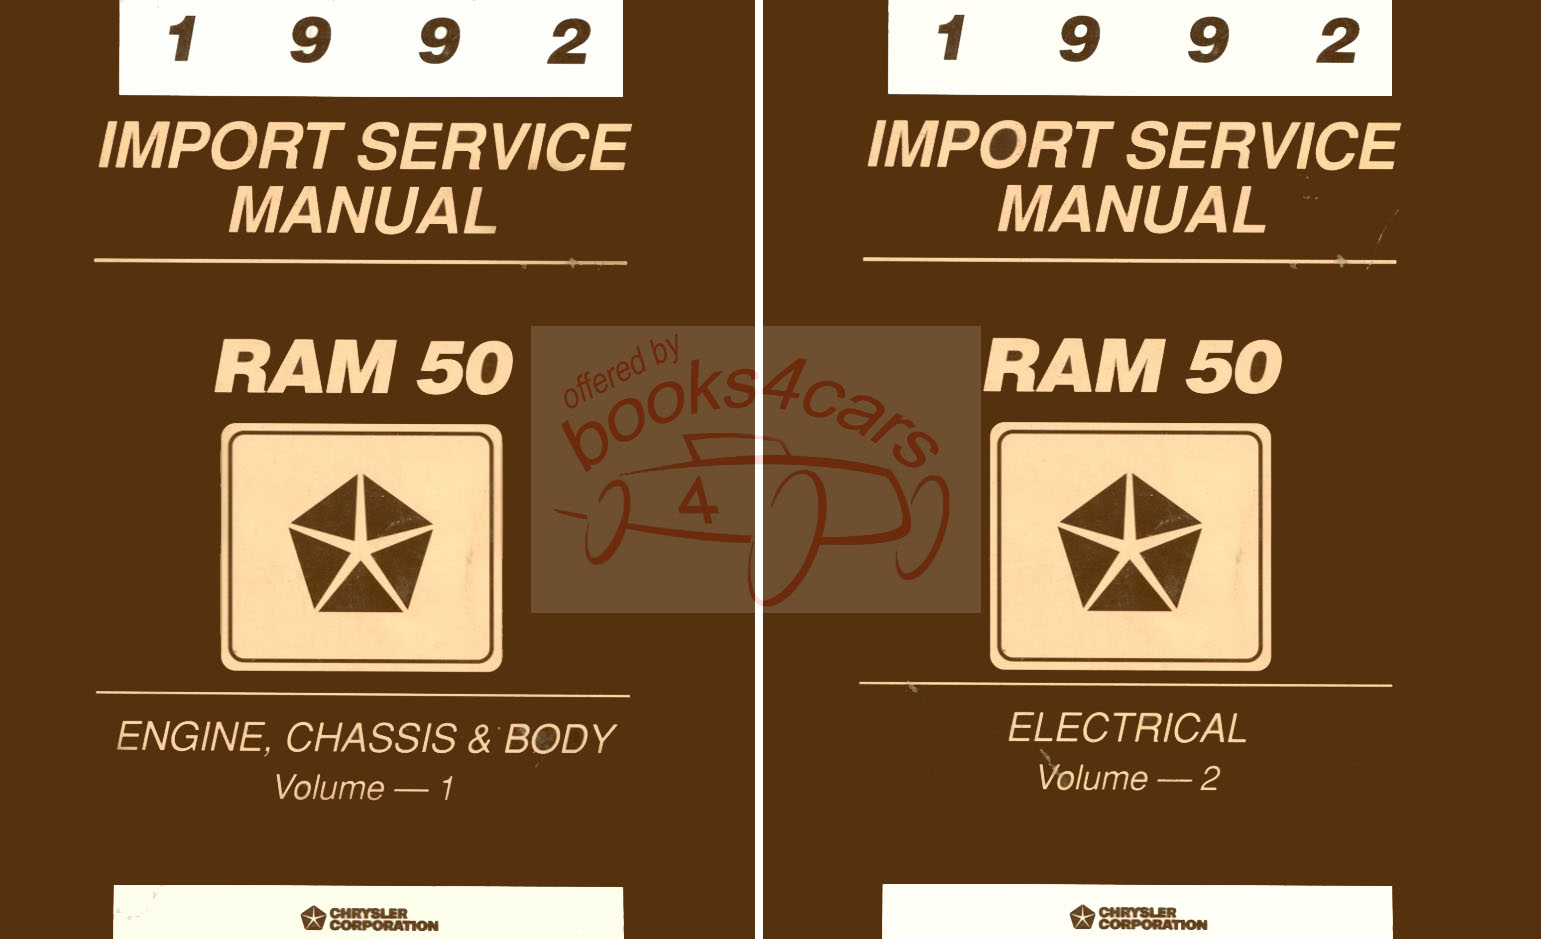 92 Ram 50 pickup Service Manual 2-volume set by Dodge